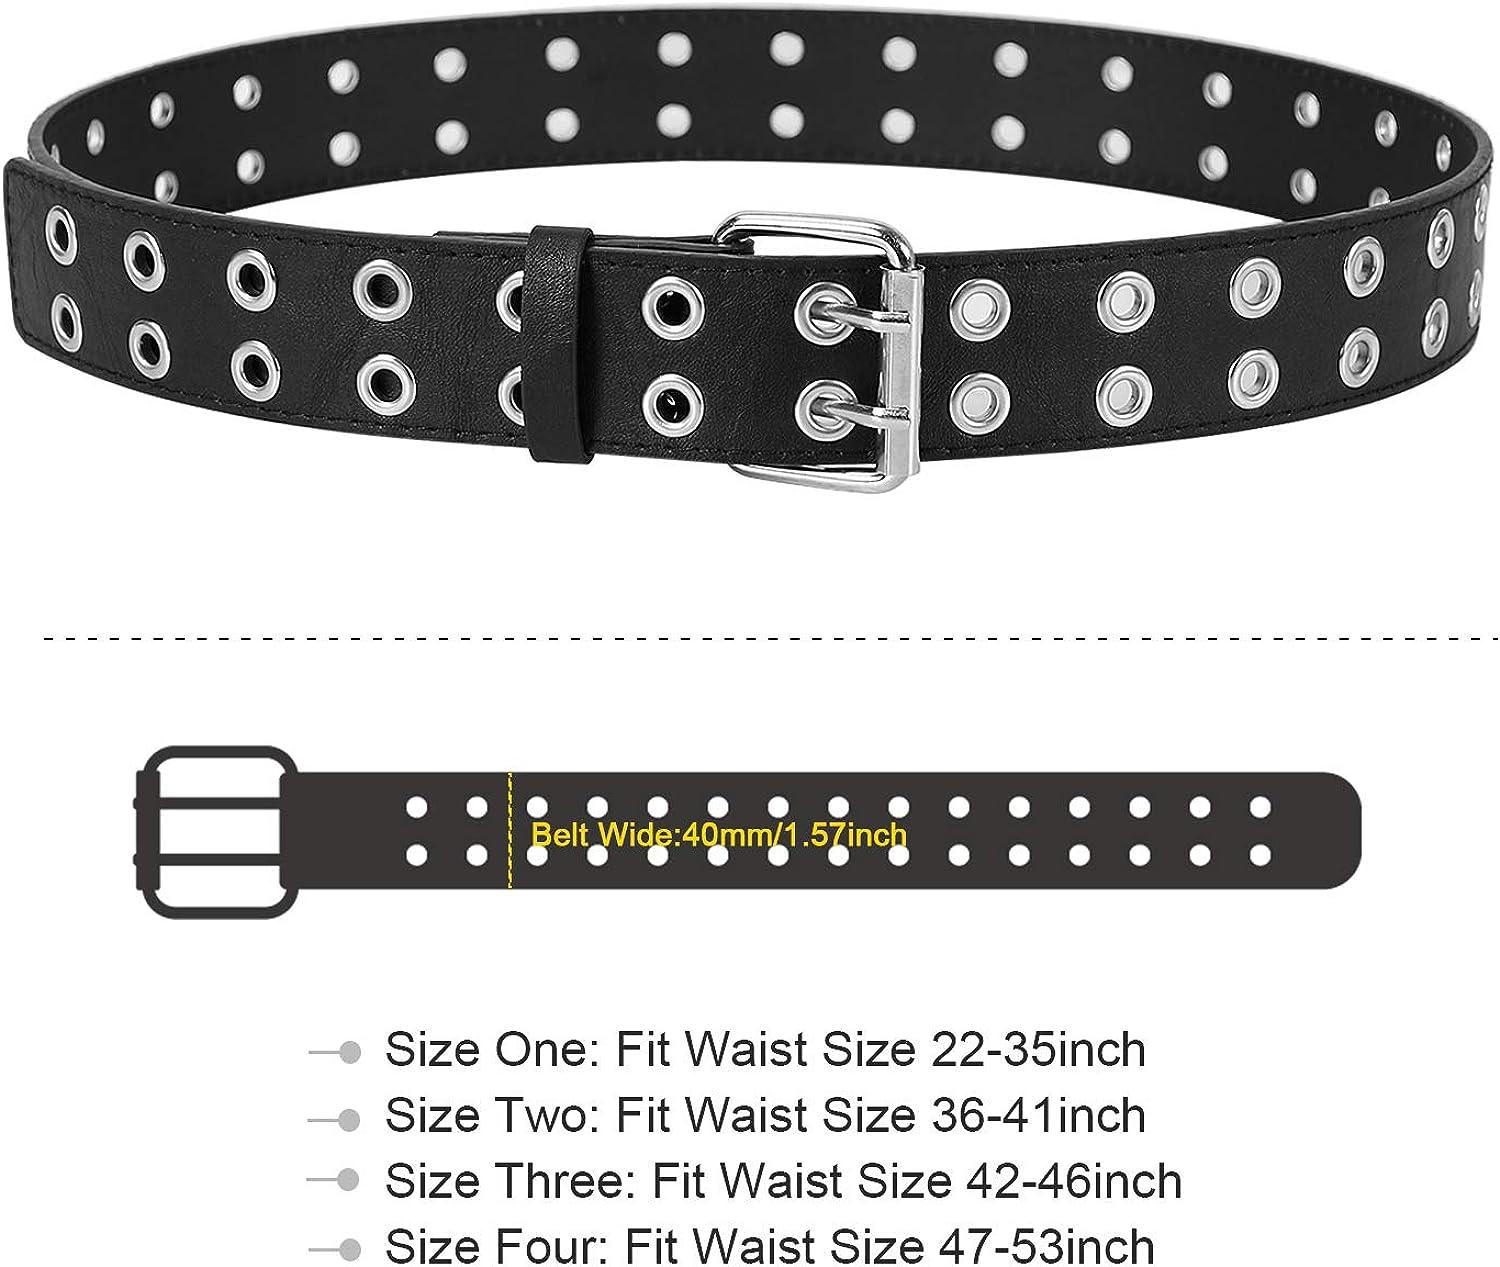 Grommet Leather Belts for Women,Studded Belt Punk Accessories, Cute Belt